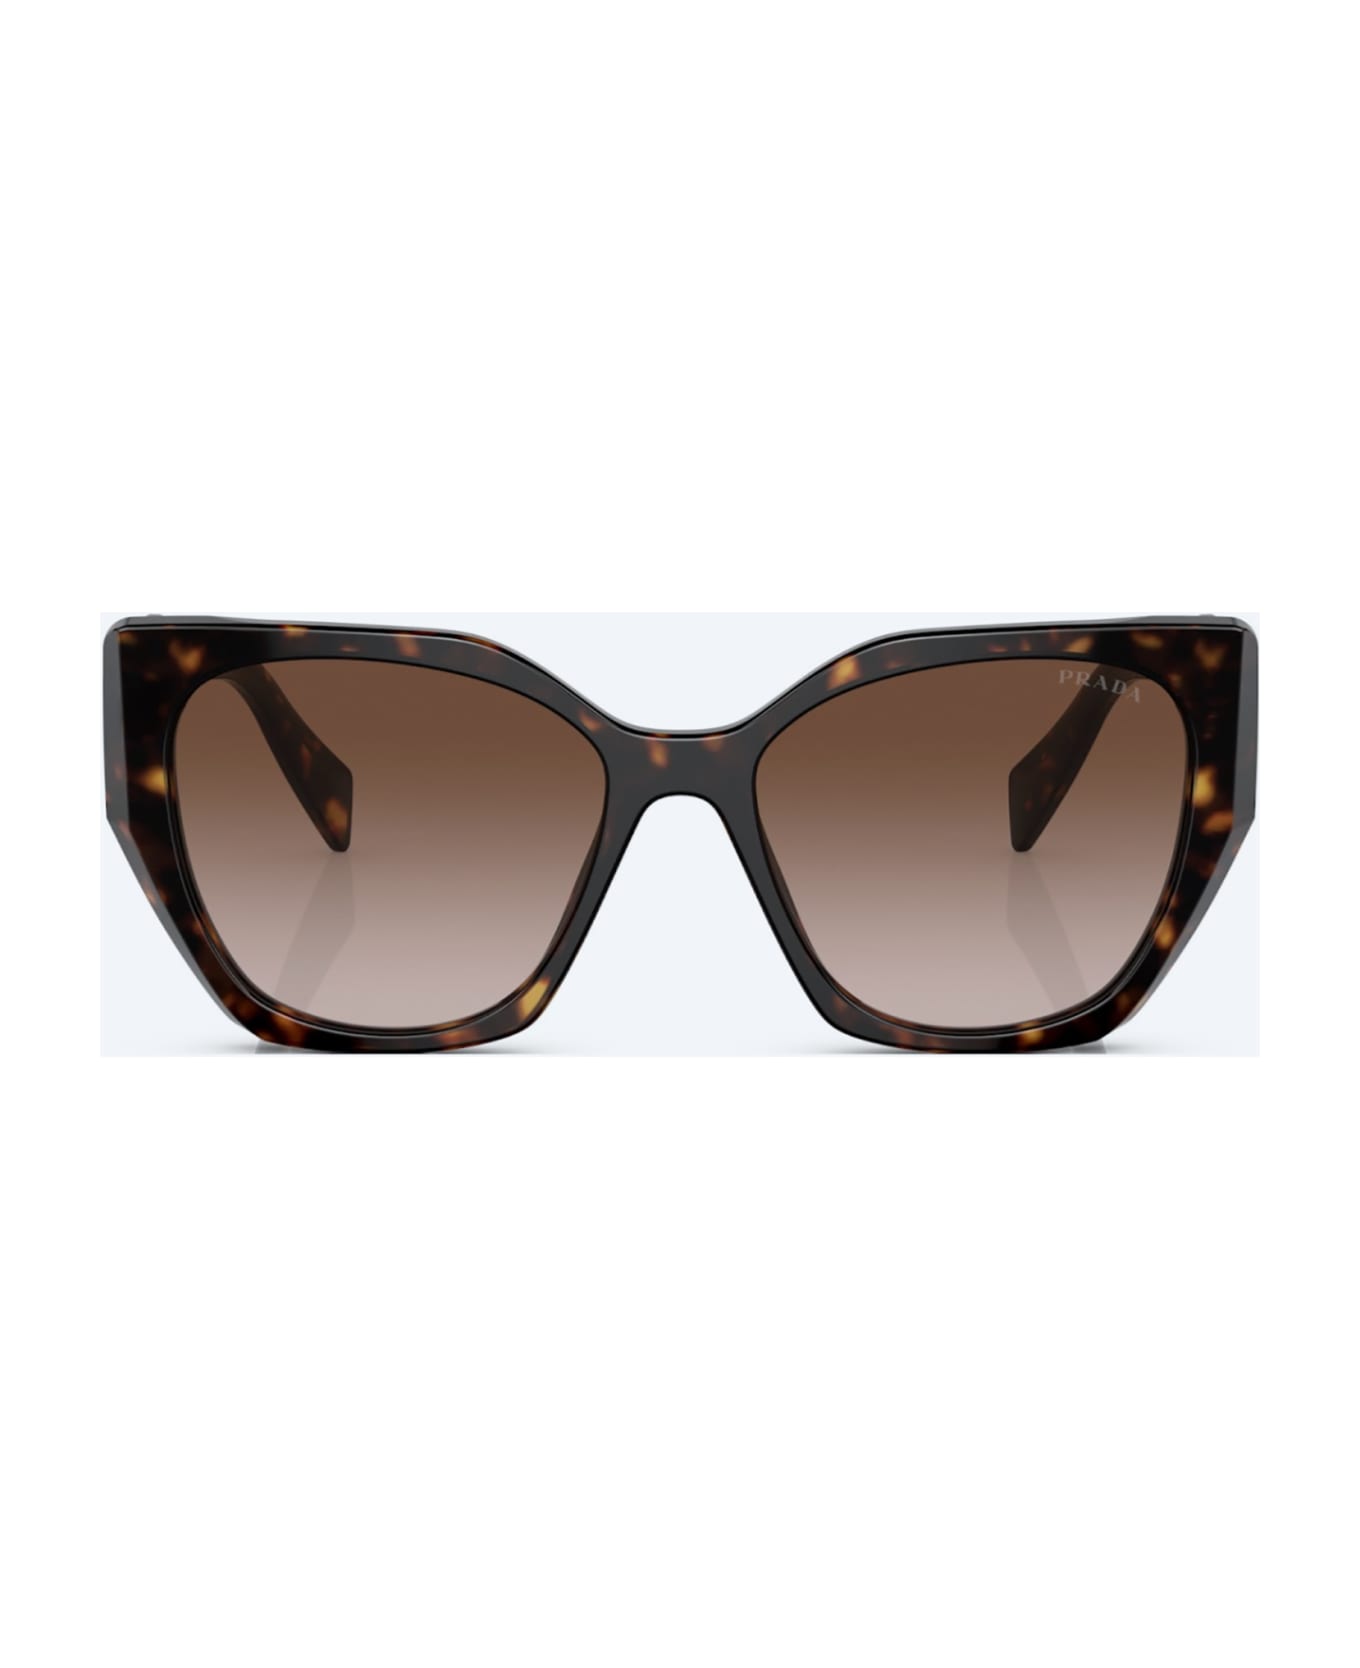 Prada Eyewear 19ZS SOLE Sunglasses サングラス